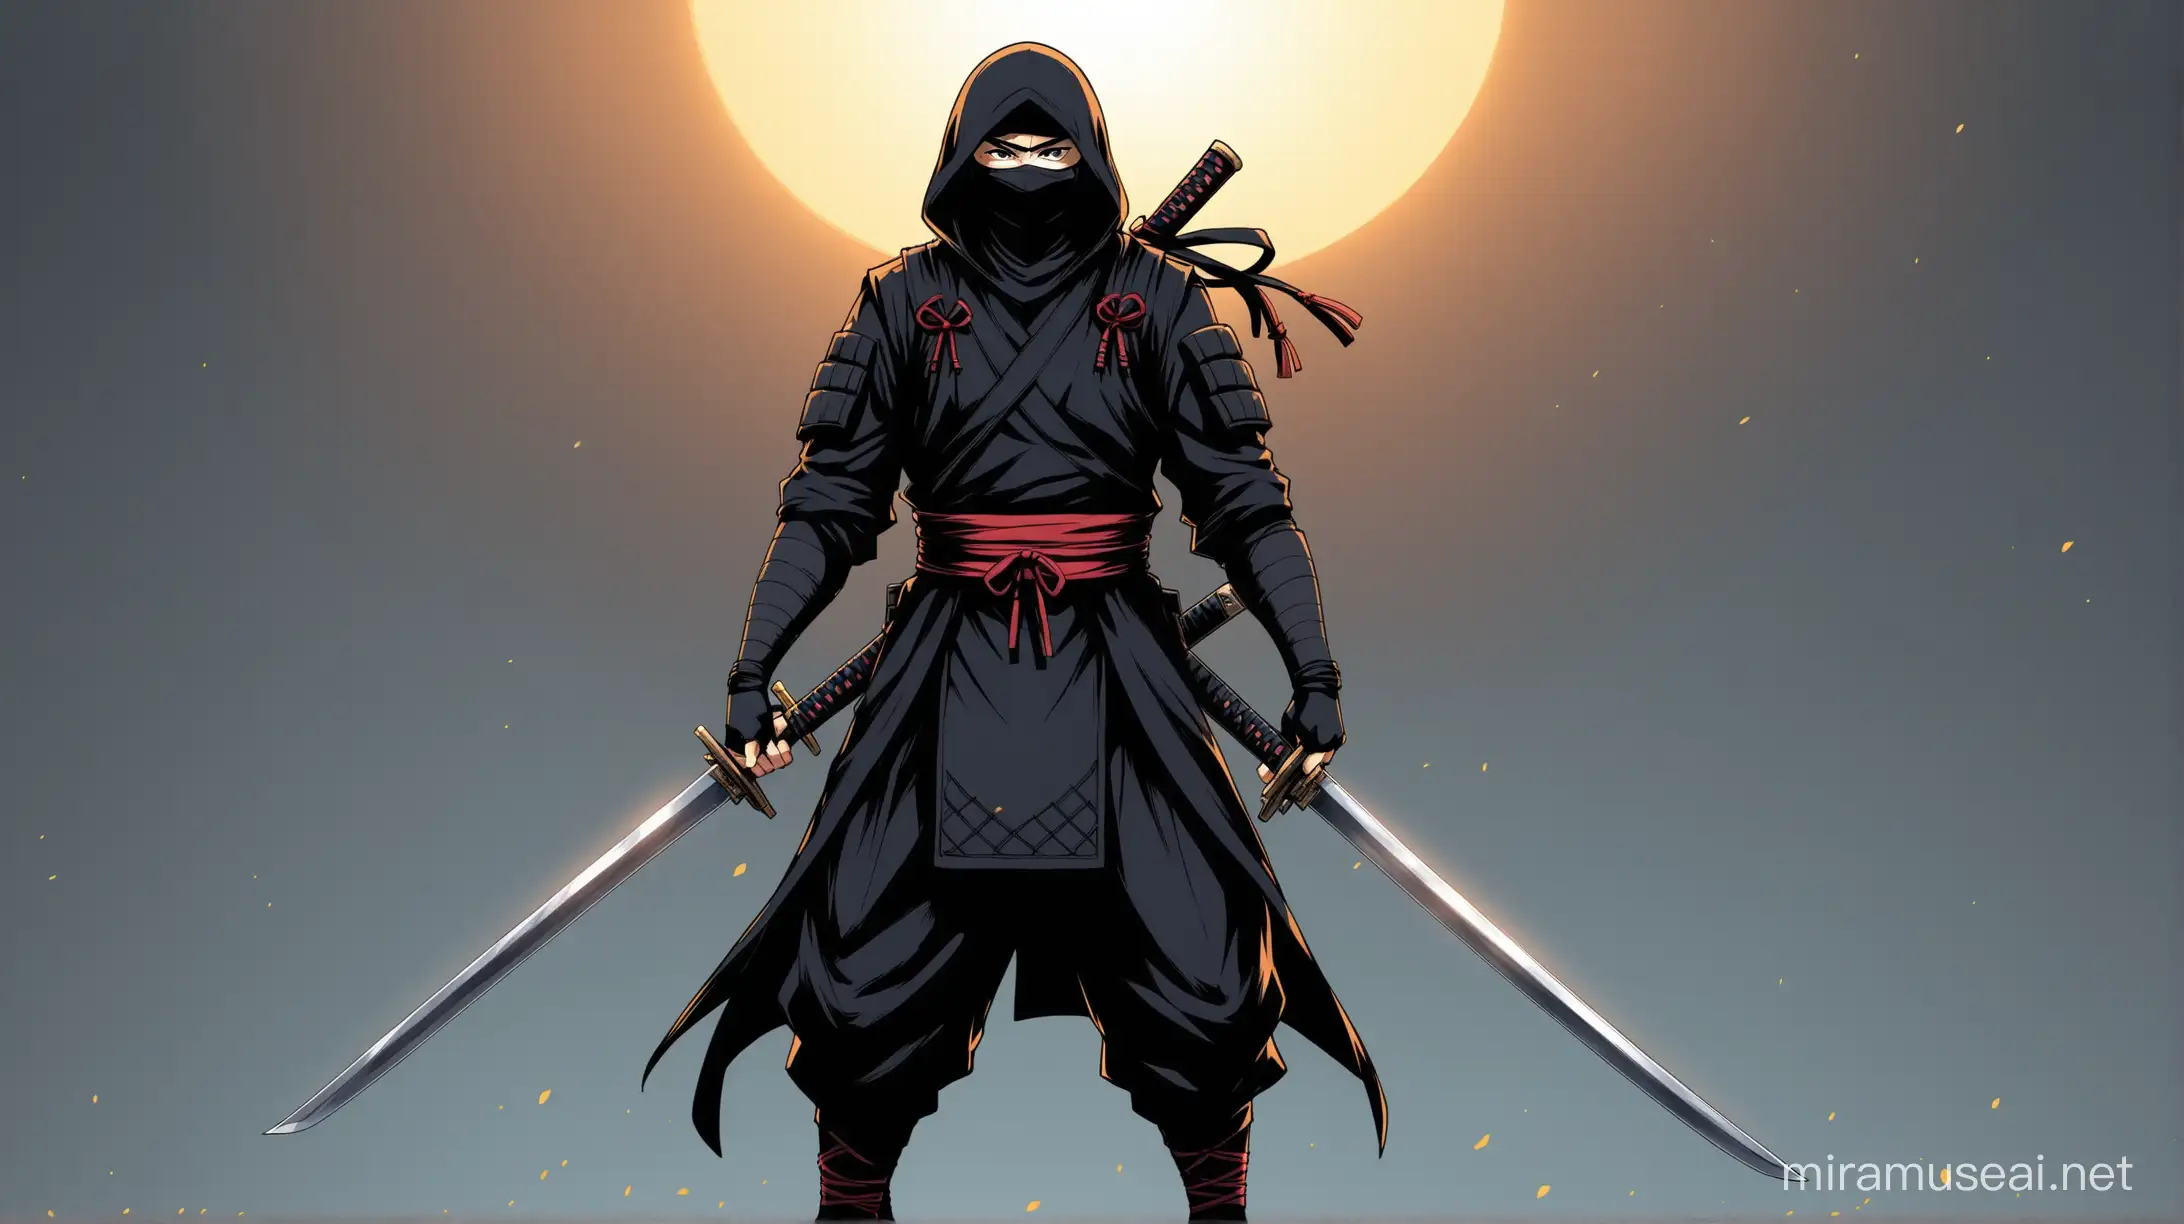 Stealthy Ninja Warrior with Sword Ready